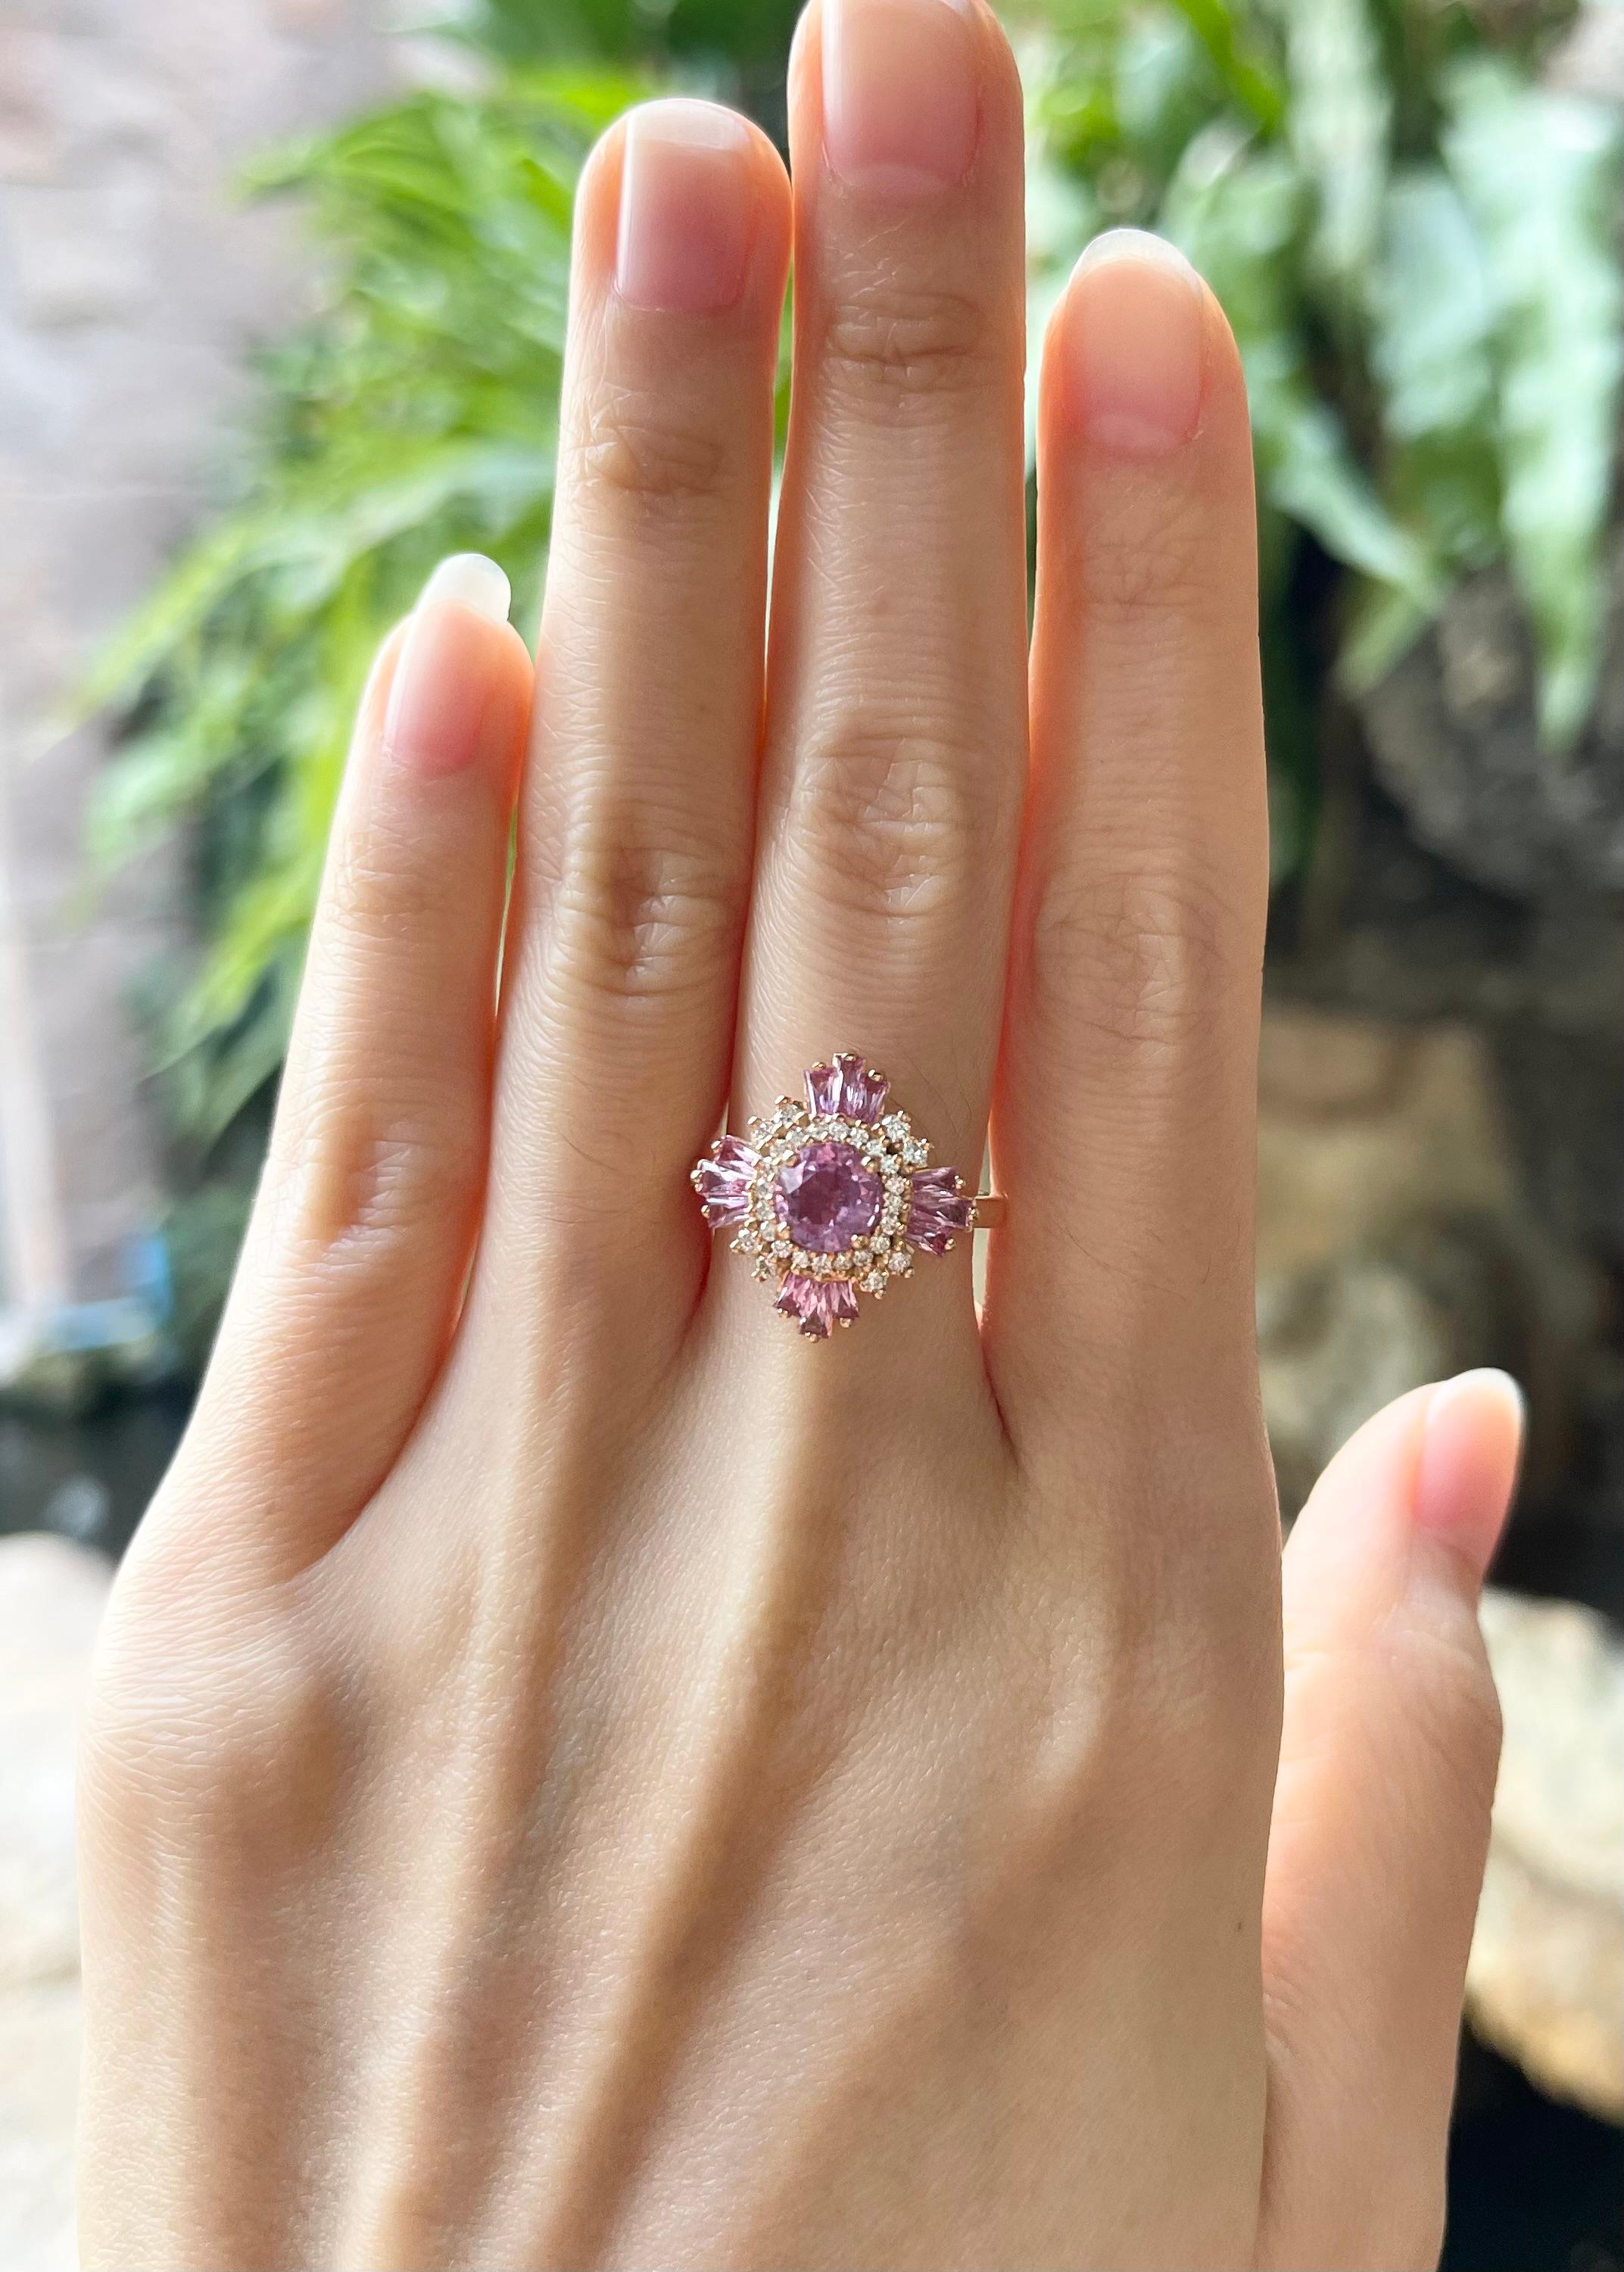 Pink Sapphire 1.30 carats, Pink Sapphire 1.21 carats and Diamond 0.26 carat Ring set in 18K Rose Gold Settings

Width:  1.6 cm 
Length: 1.6 cm
Ring Size: 51
Total Weight: 6.98 grams

